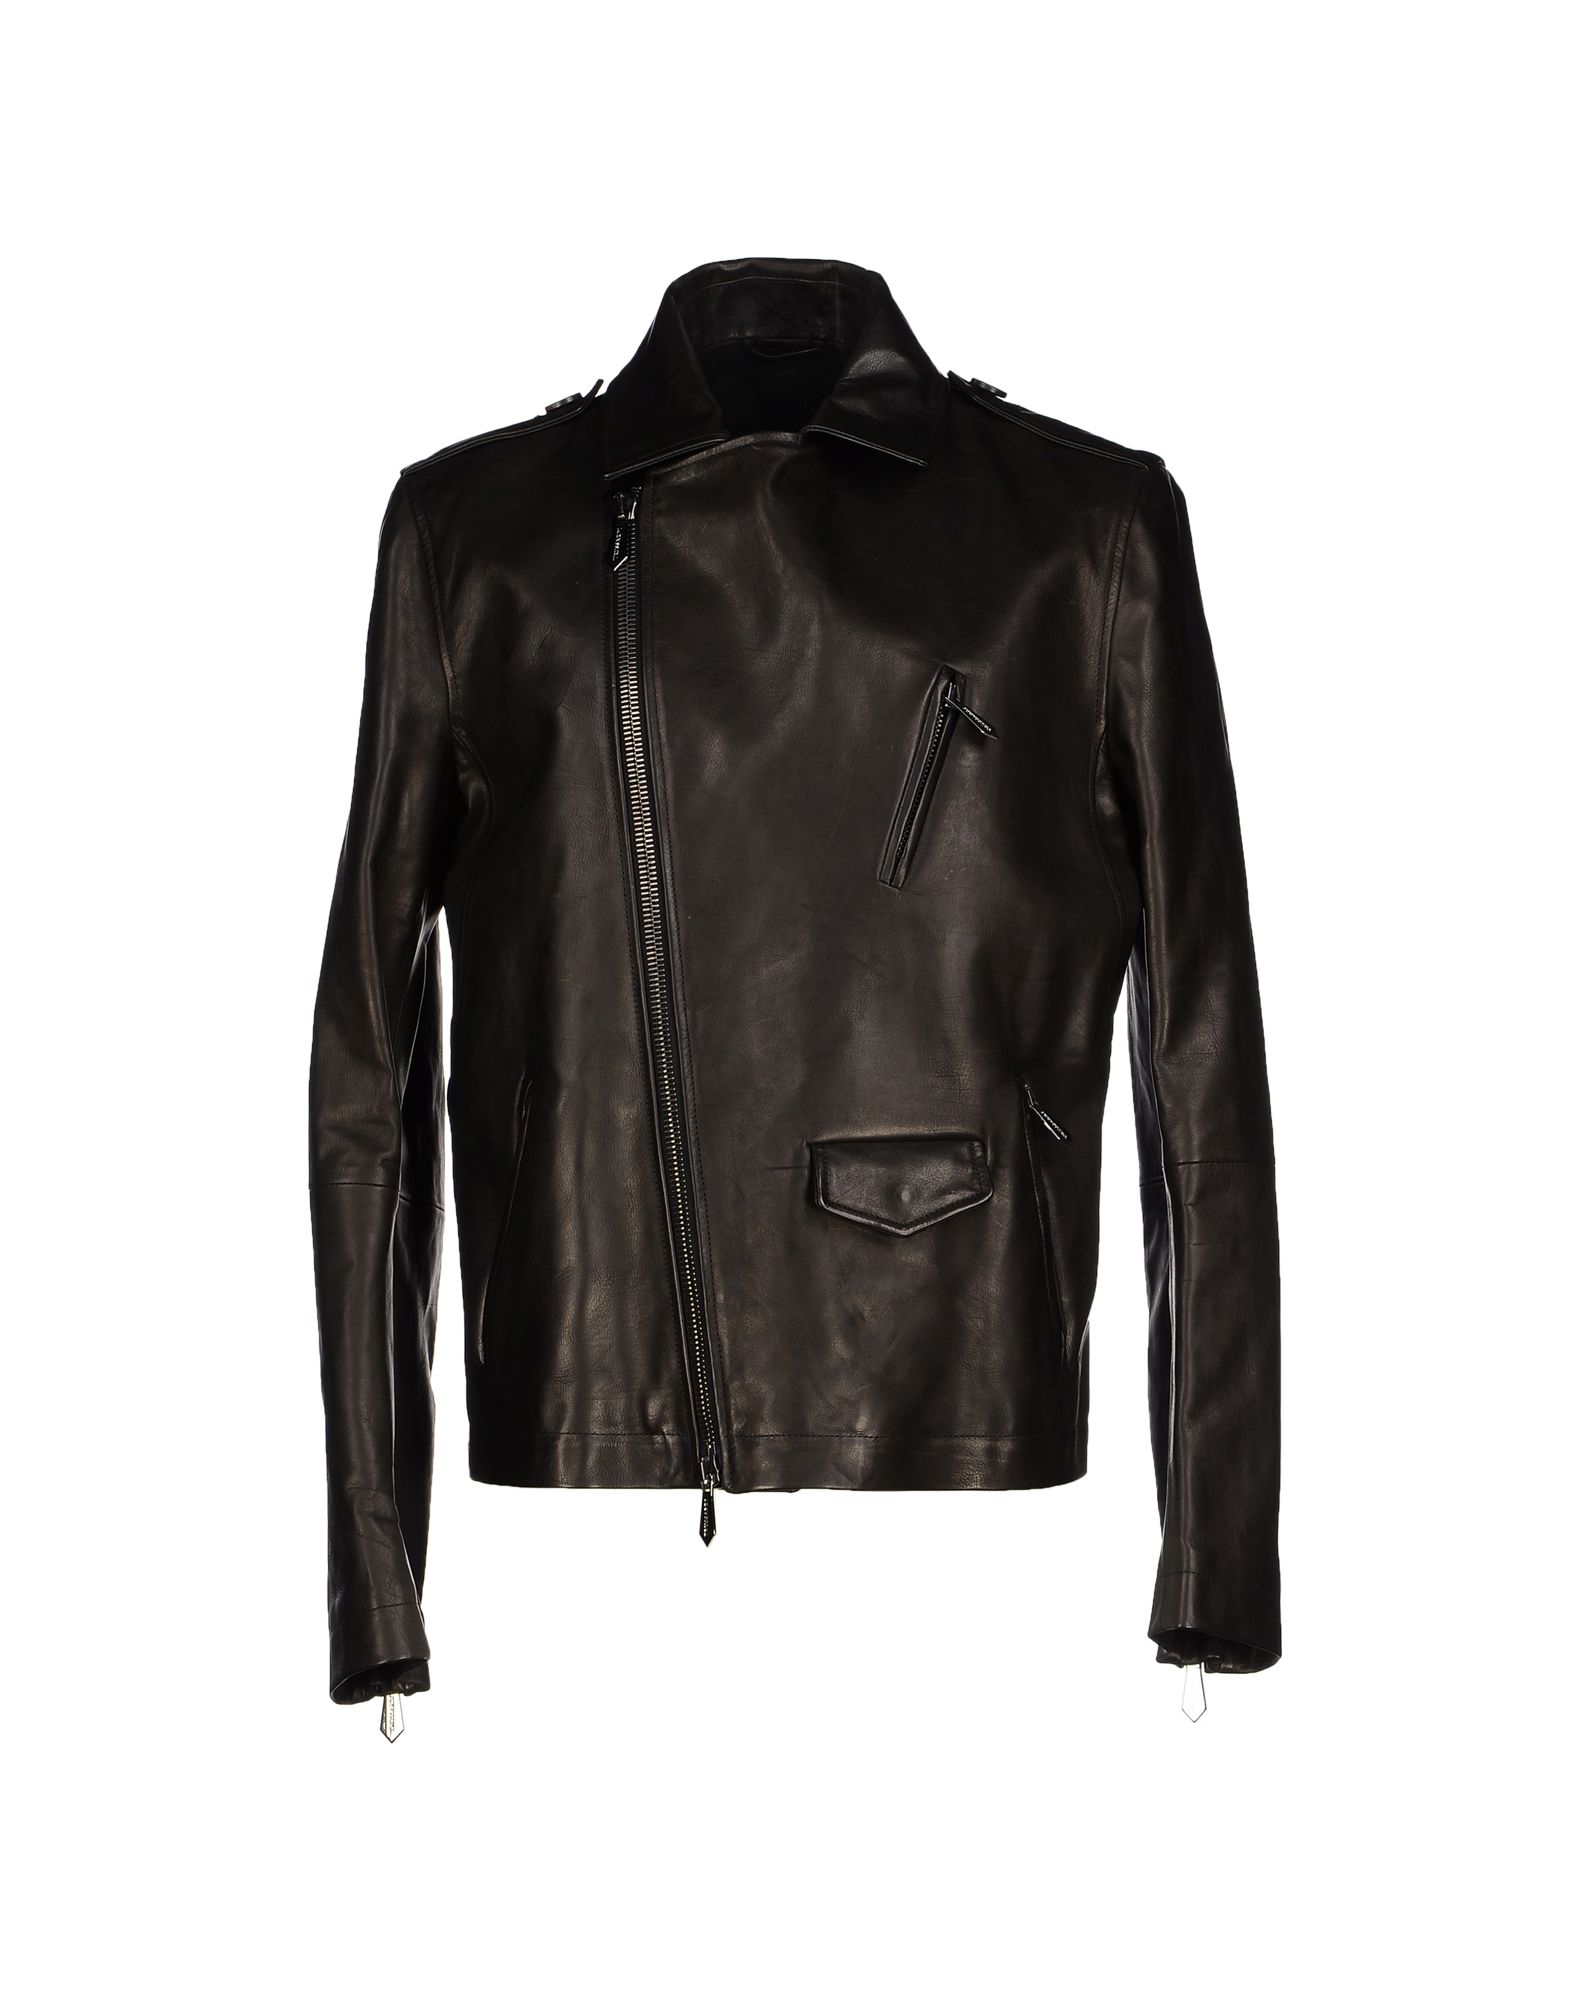 Lyst - Trussardi Jacket in Black for Men